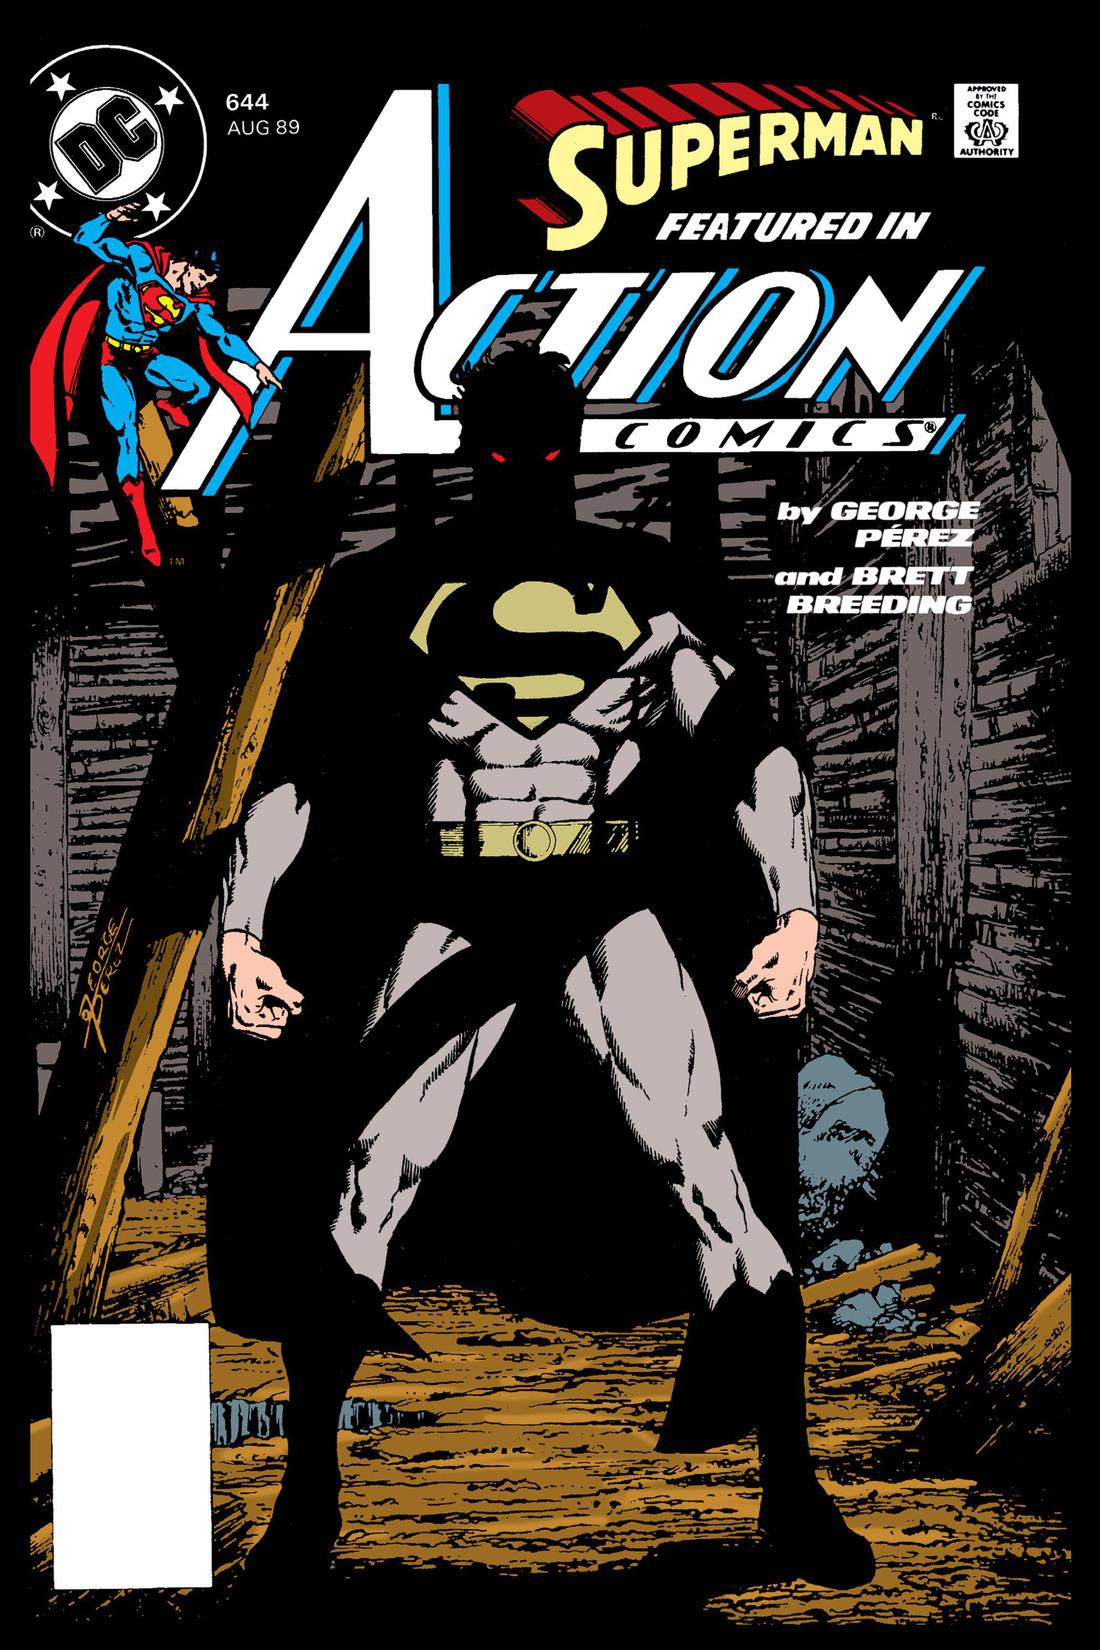 Action Comics (1938-2011) #644 preview images